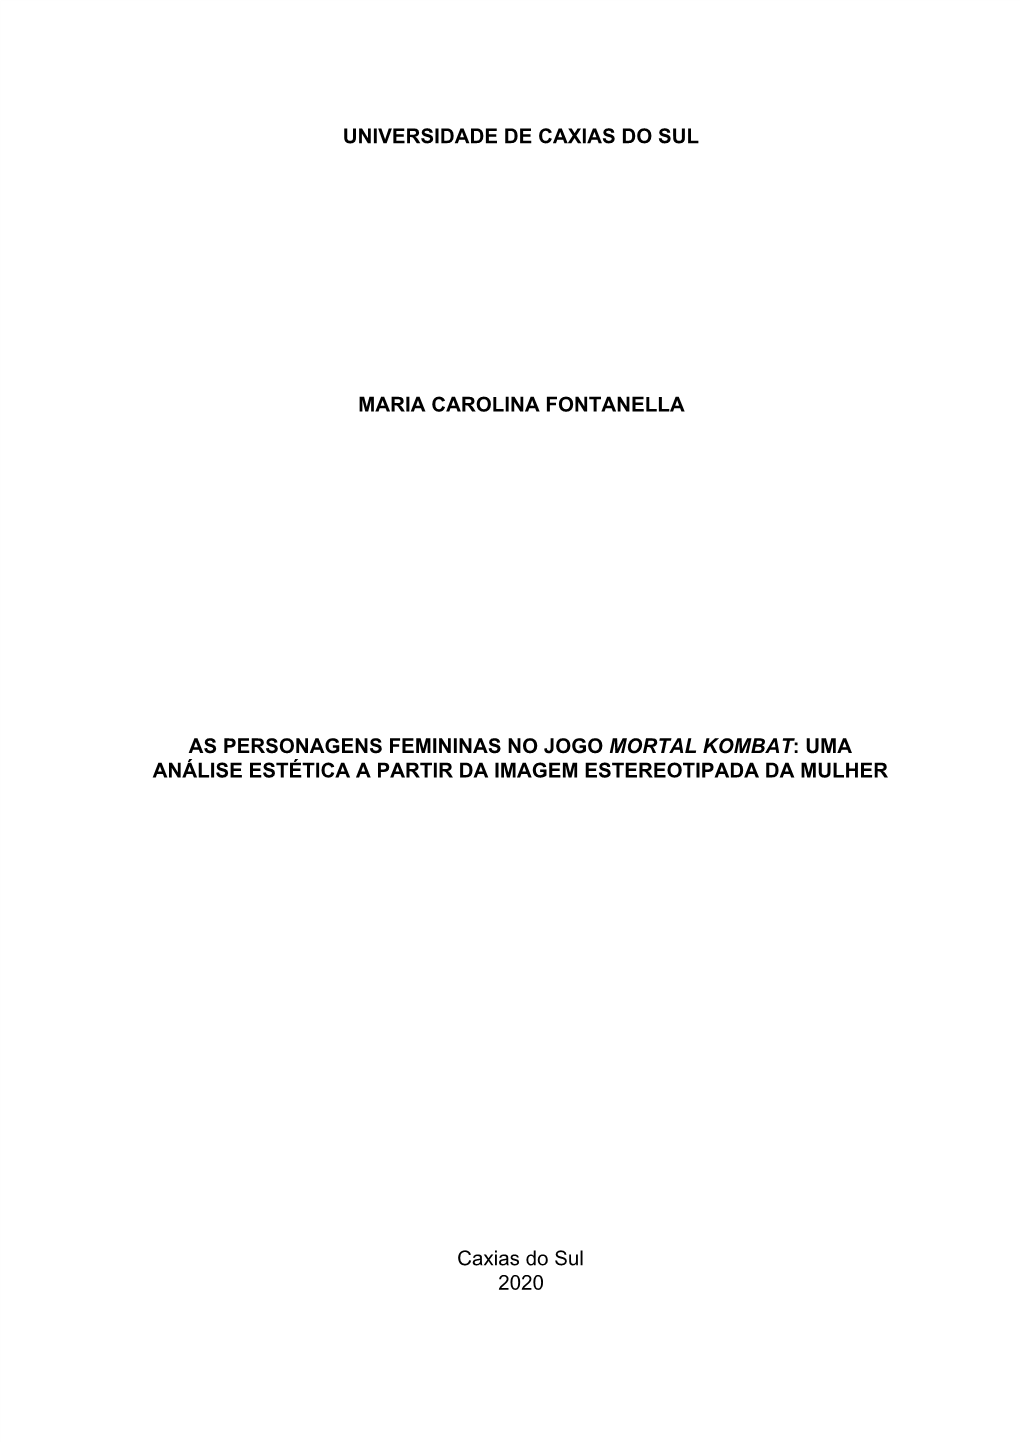 TCC Maria Carolina Fontanella.Pdf (6.619Mb)